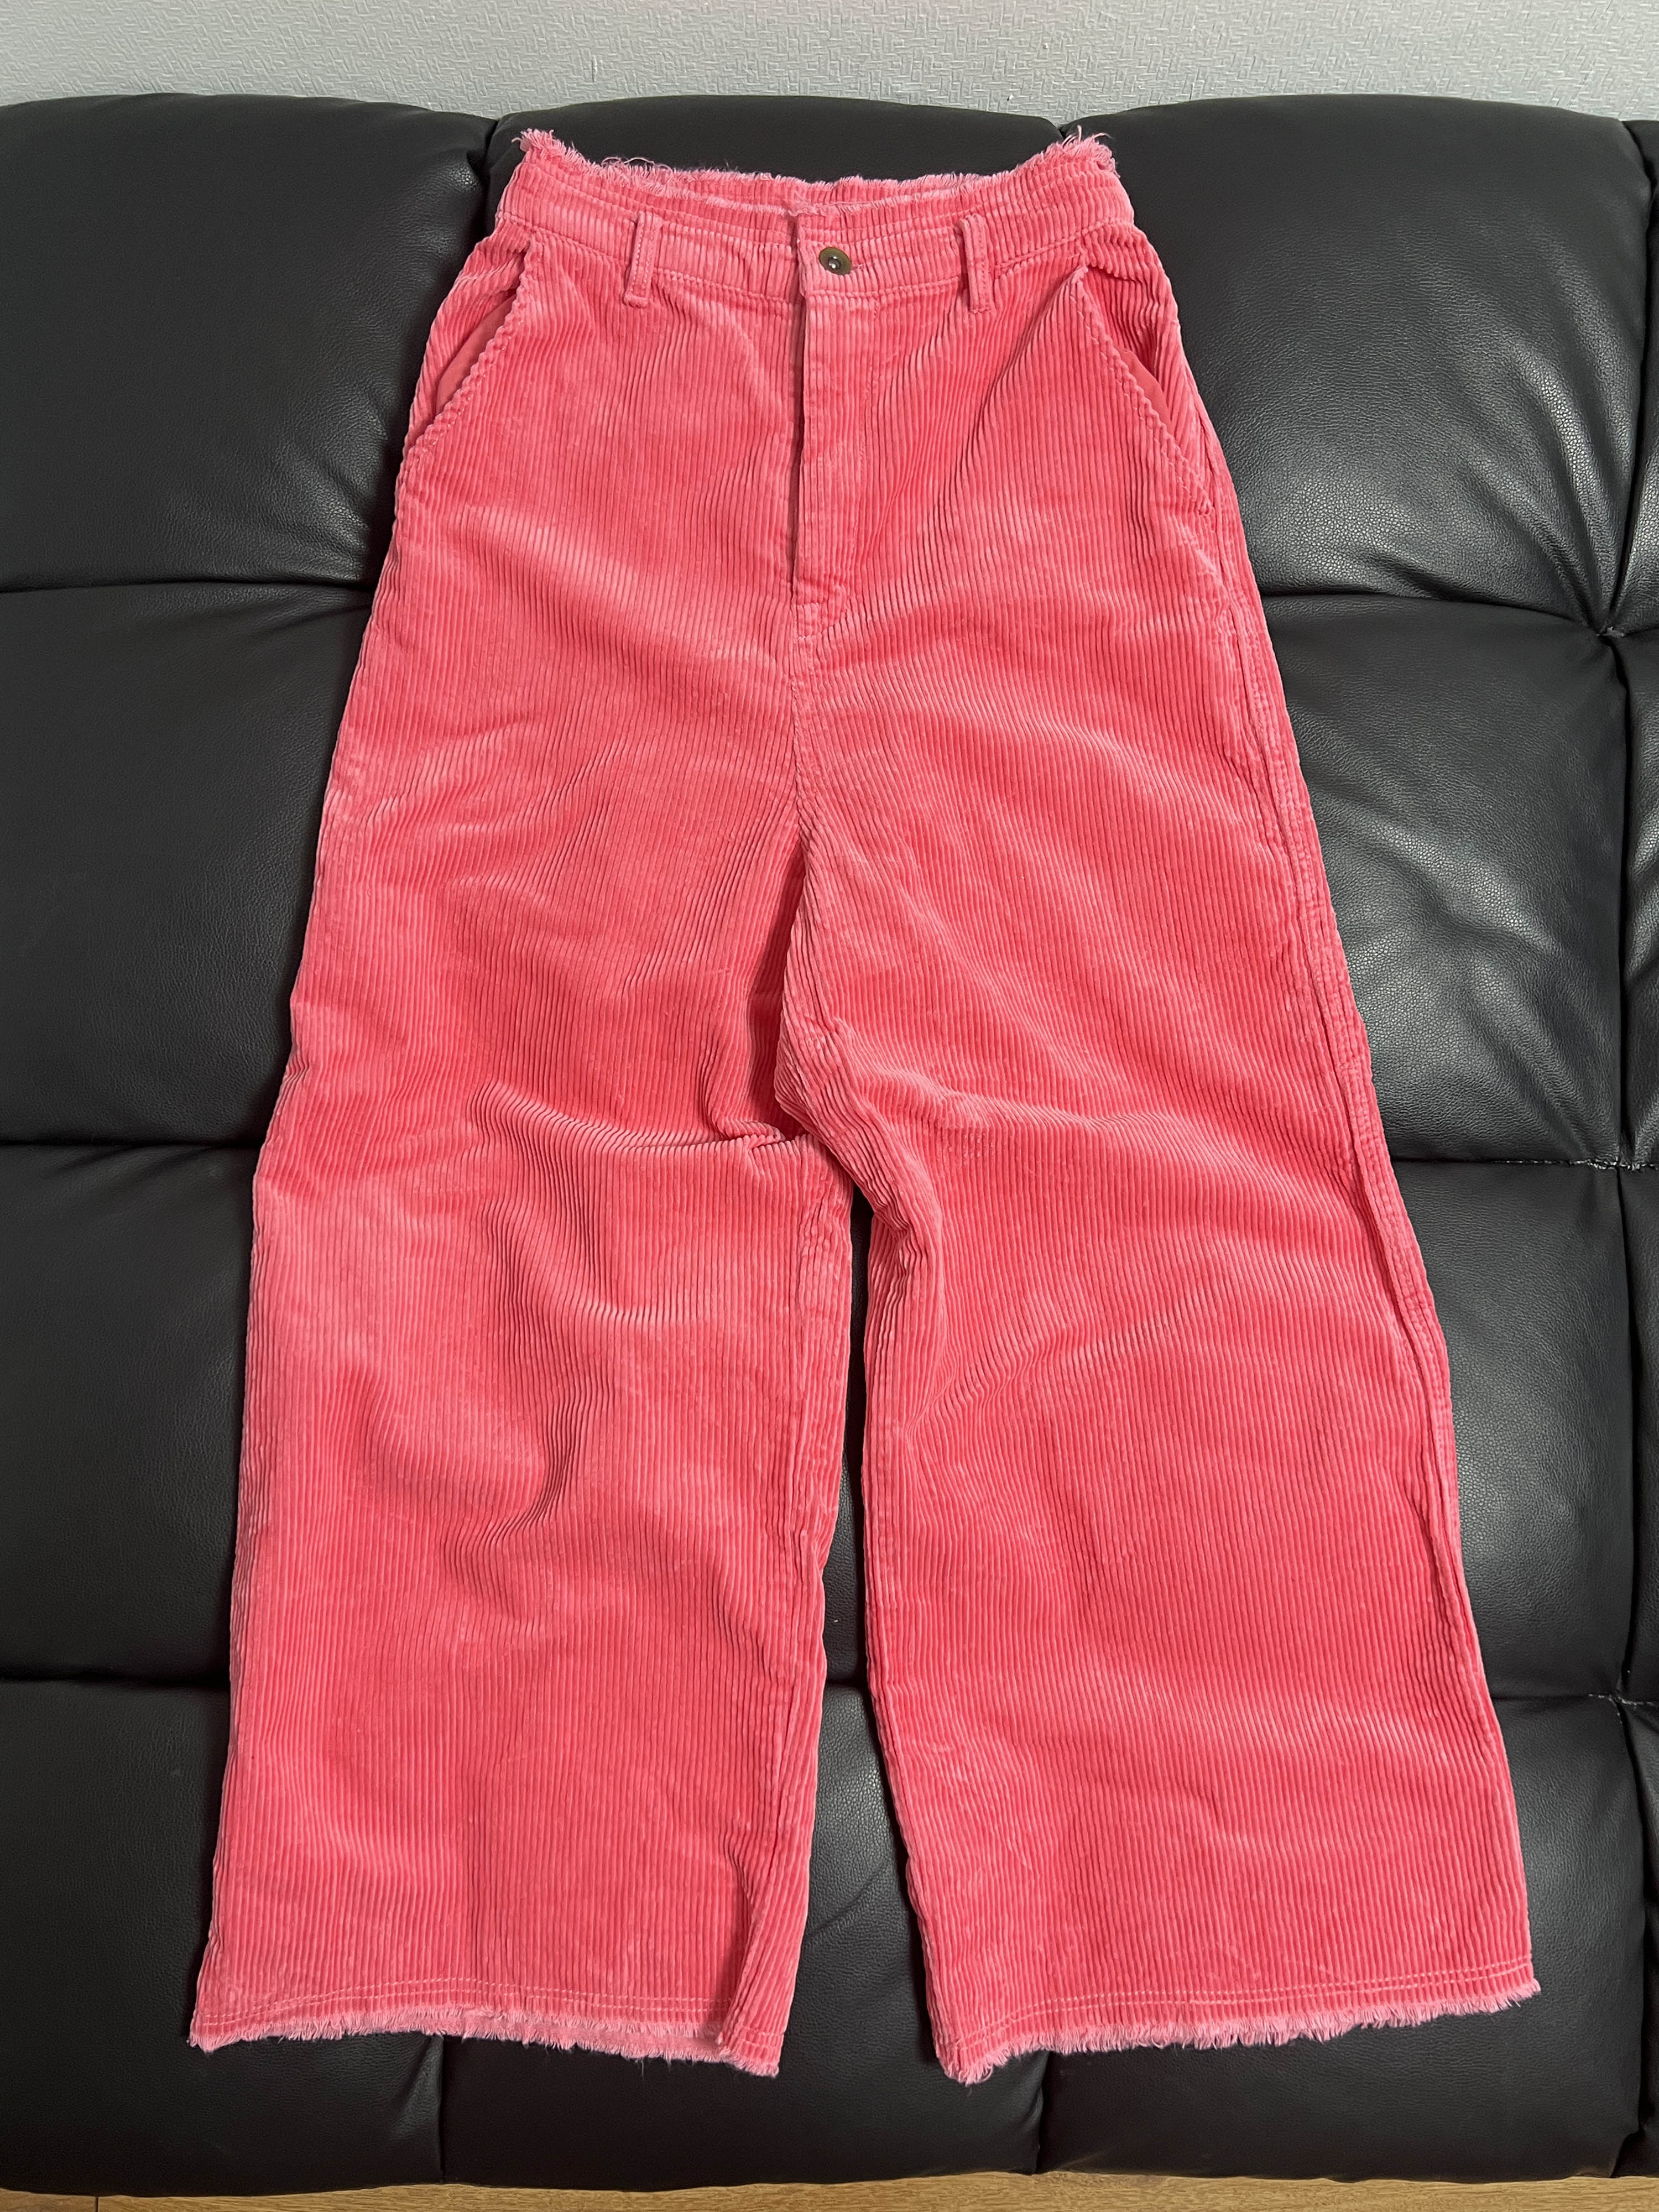 niko and... pink cord pants